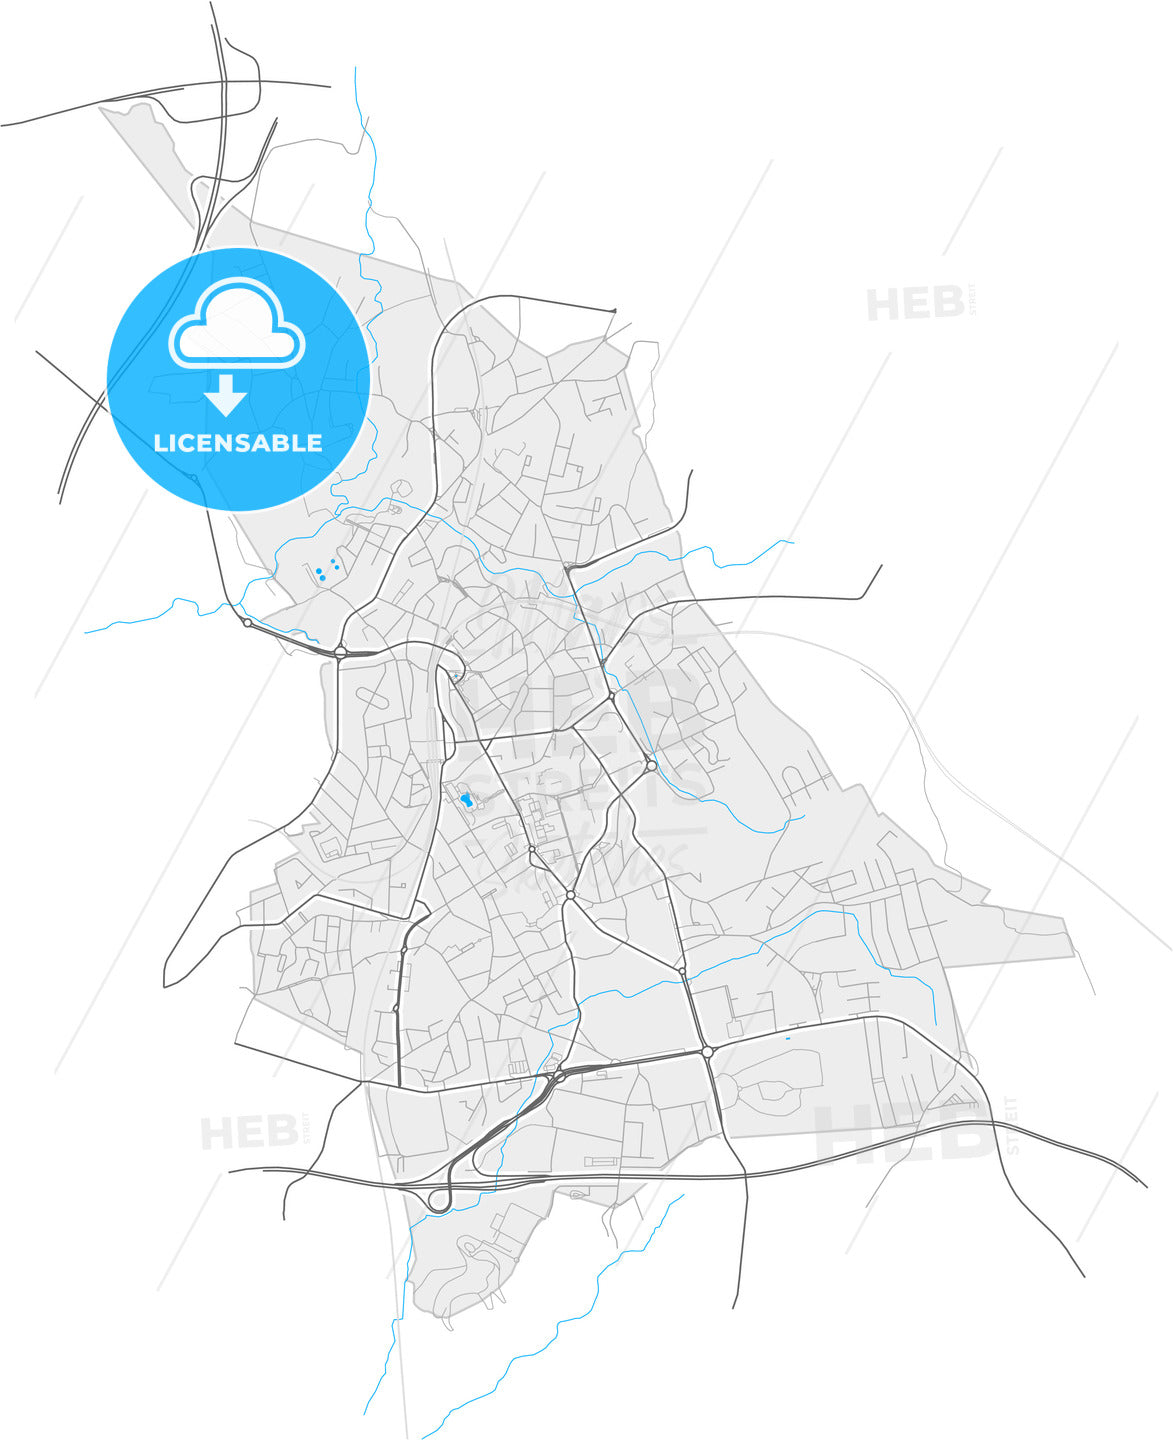 Ermesinde, Porto, Portugal, high quality vector map